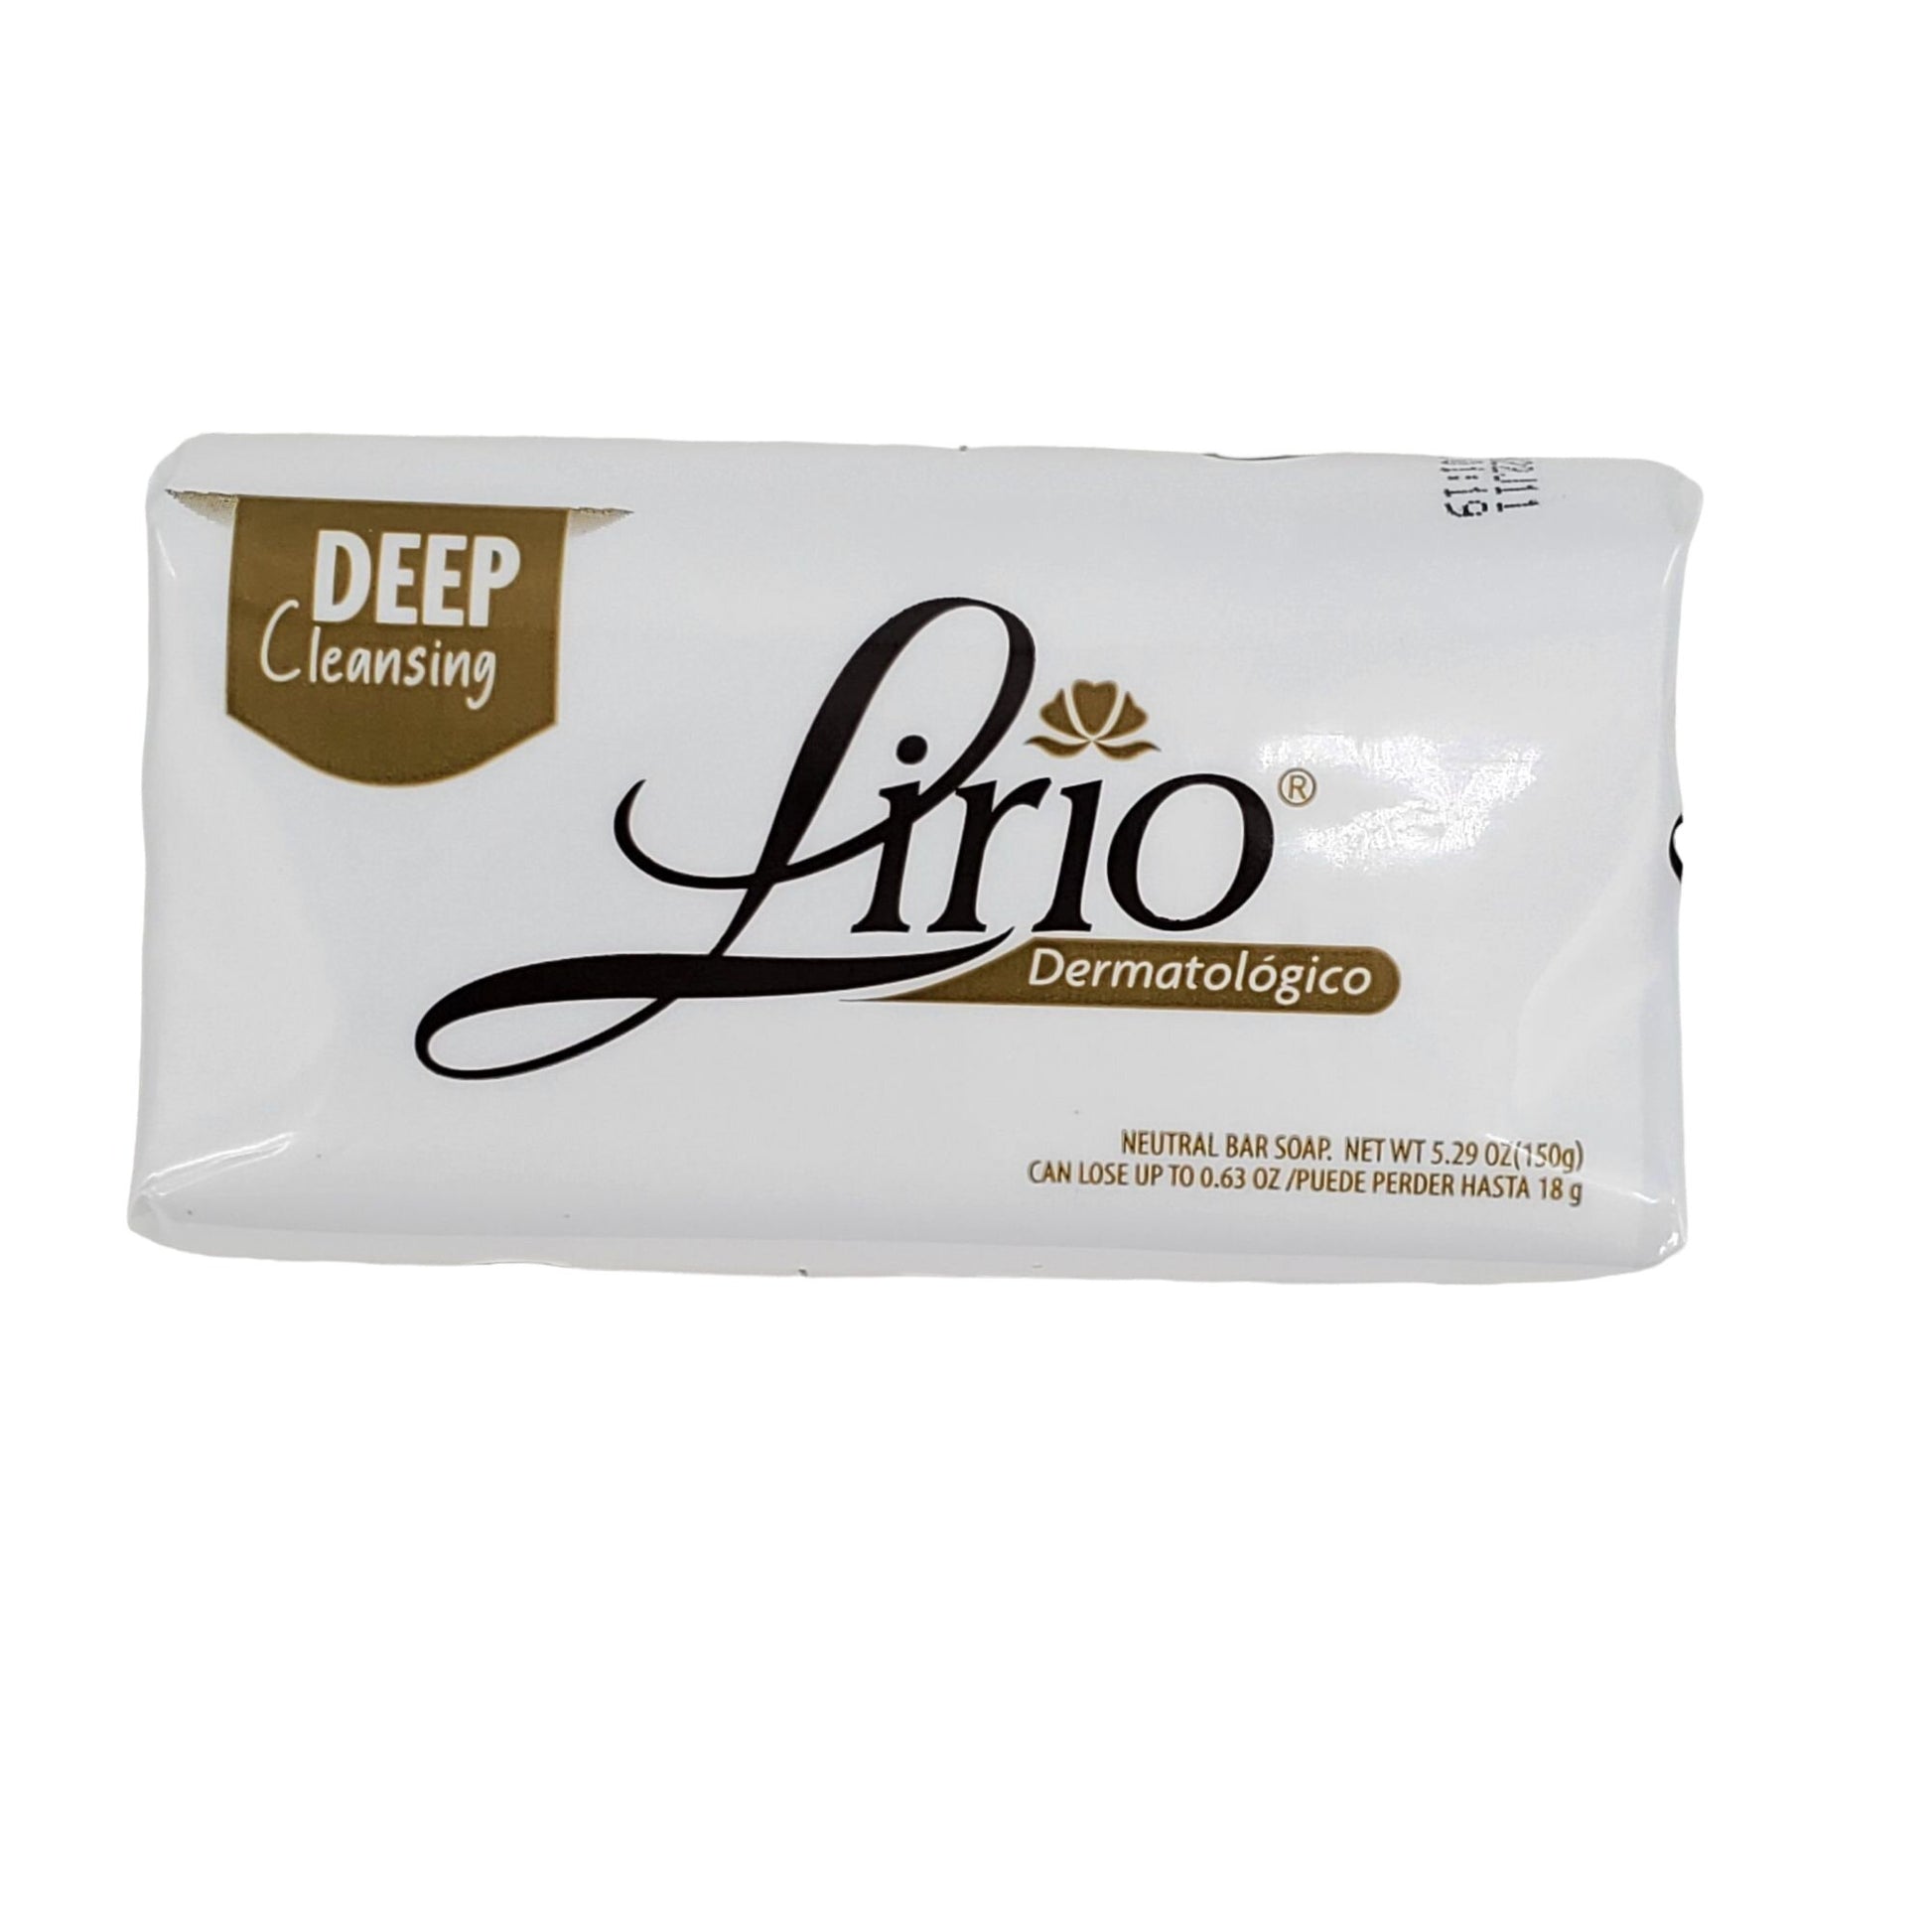 Lirio Dermatologic Cleansing Bath/Body soap- 5.29 oz (150g) - Jabon Lirio Neutral Bar Soap